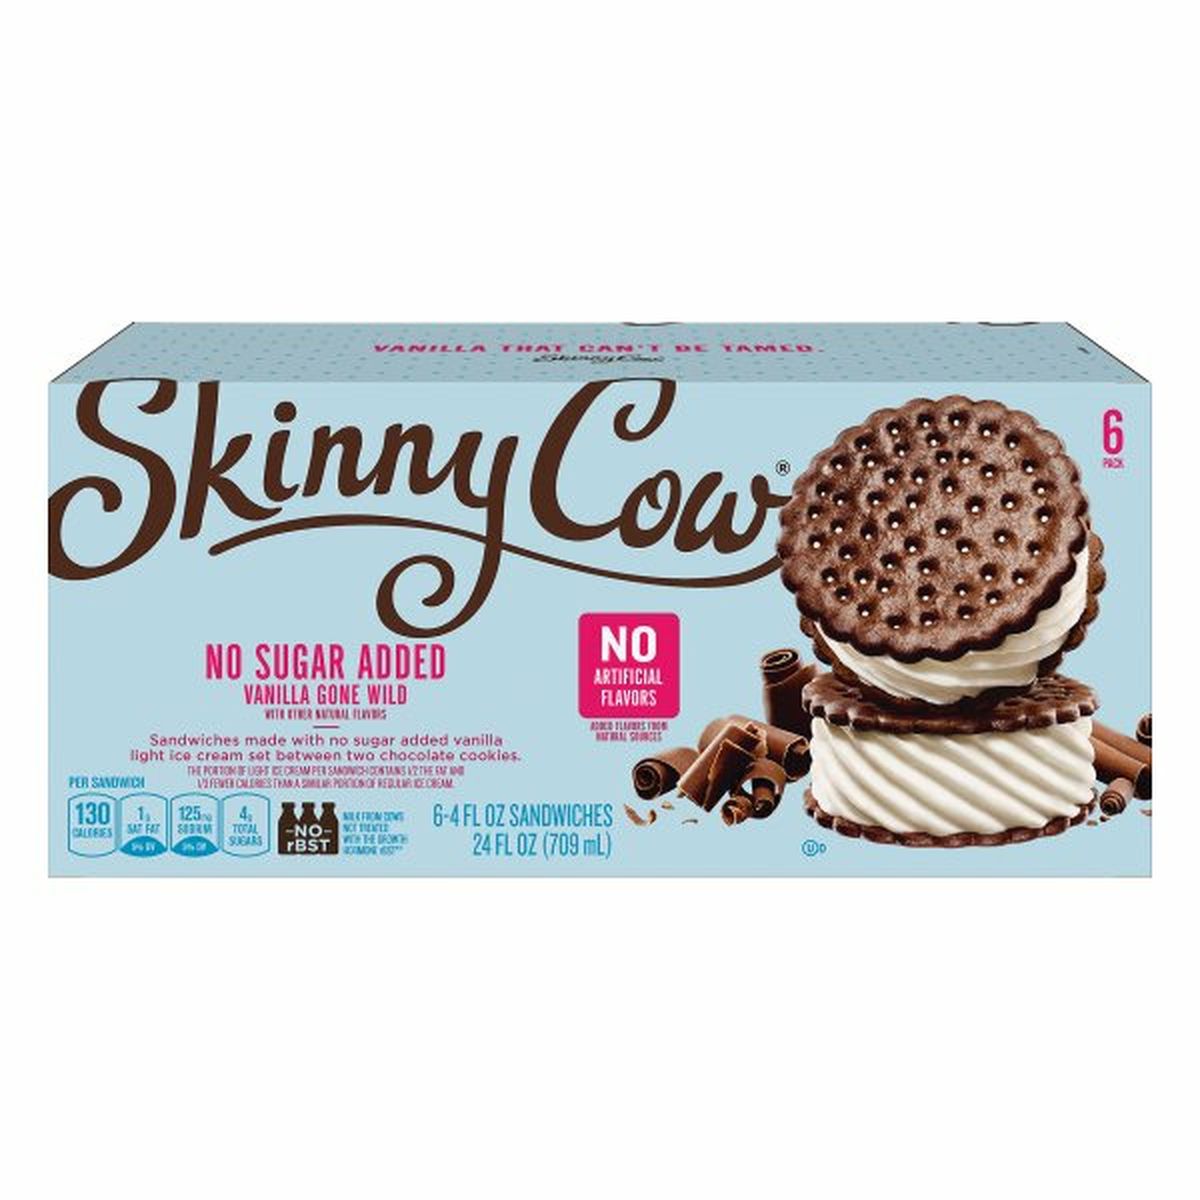 Calories in Skinny Cow Ice Cream Sandwiches, No Sugar Added, Vanilla Gone Wild, 6 Pack